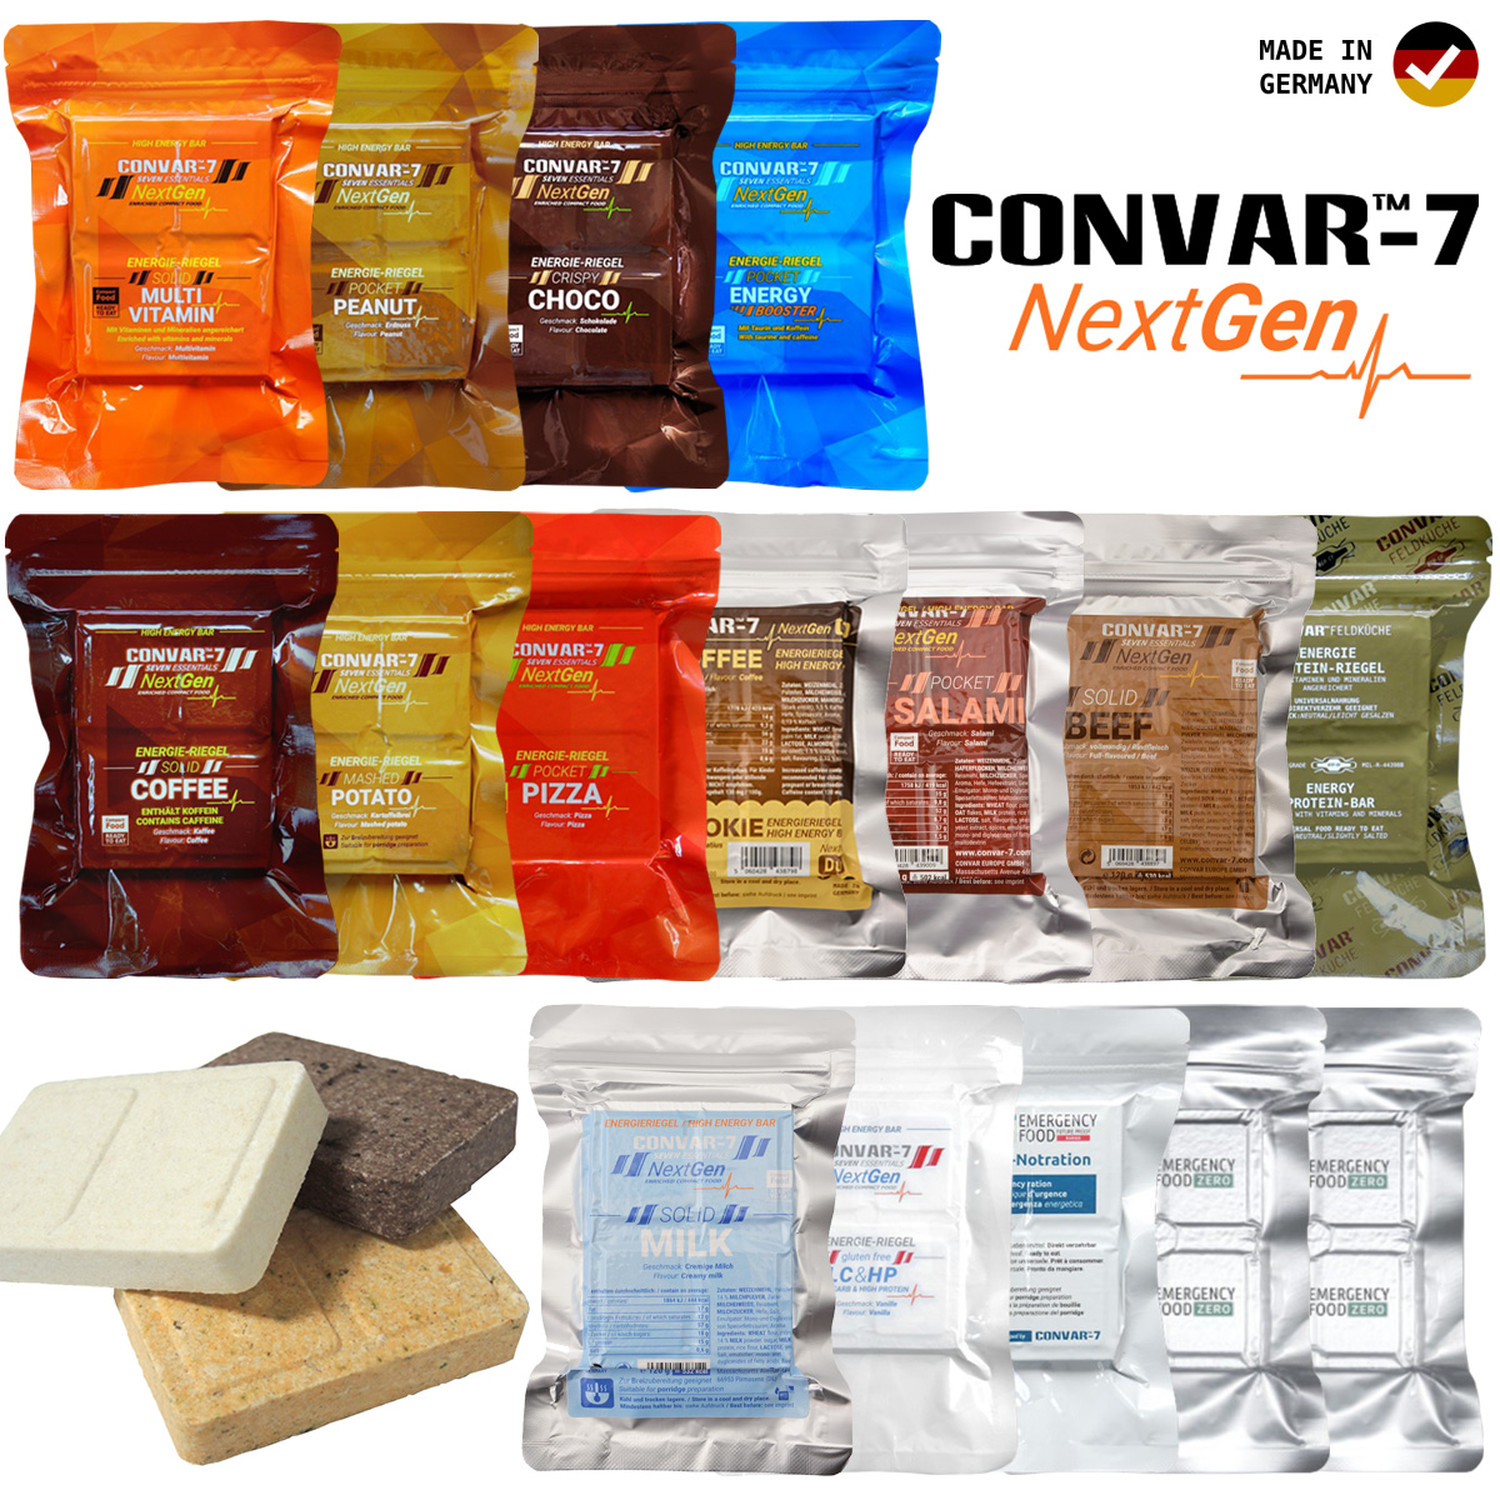 Convar-7 NextGen Energieriegel 120 g in neuen Geschmacksrichtungen